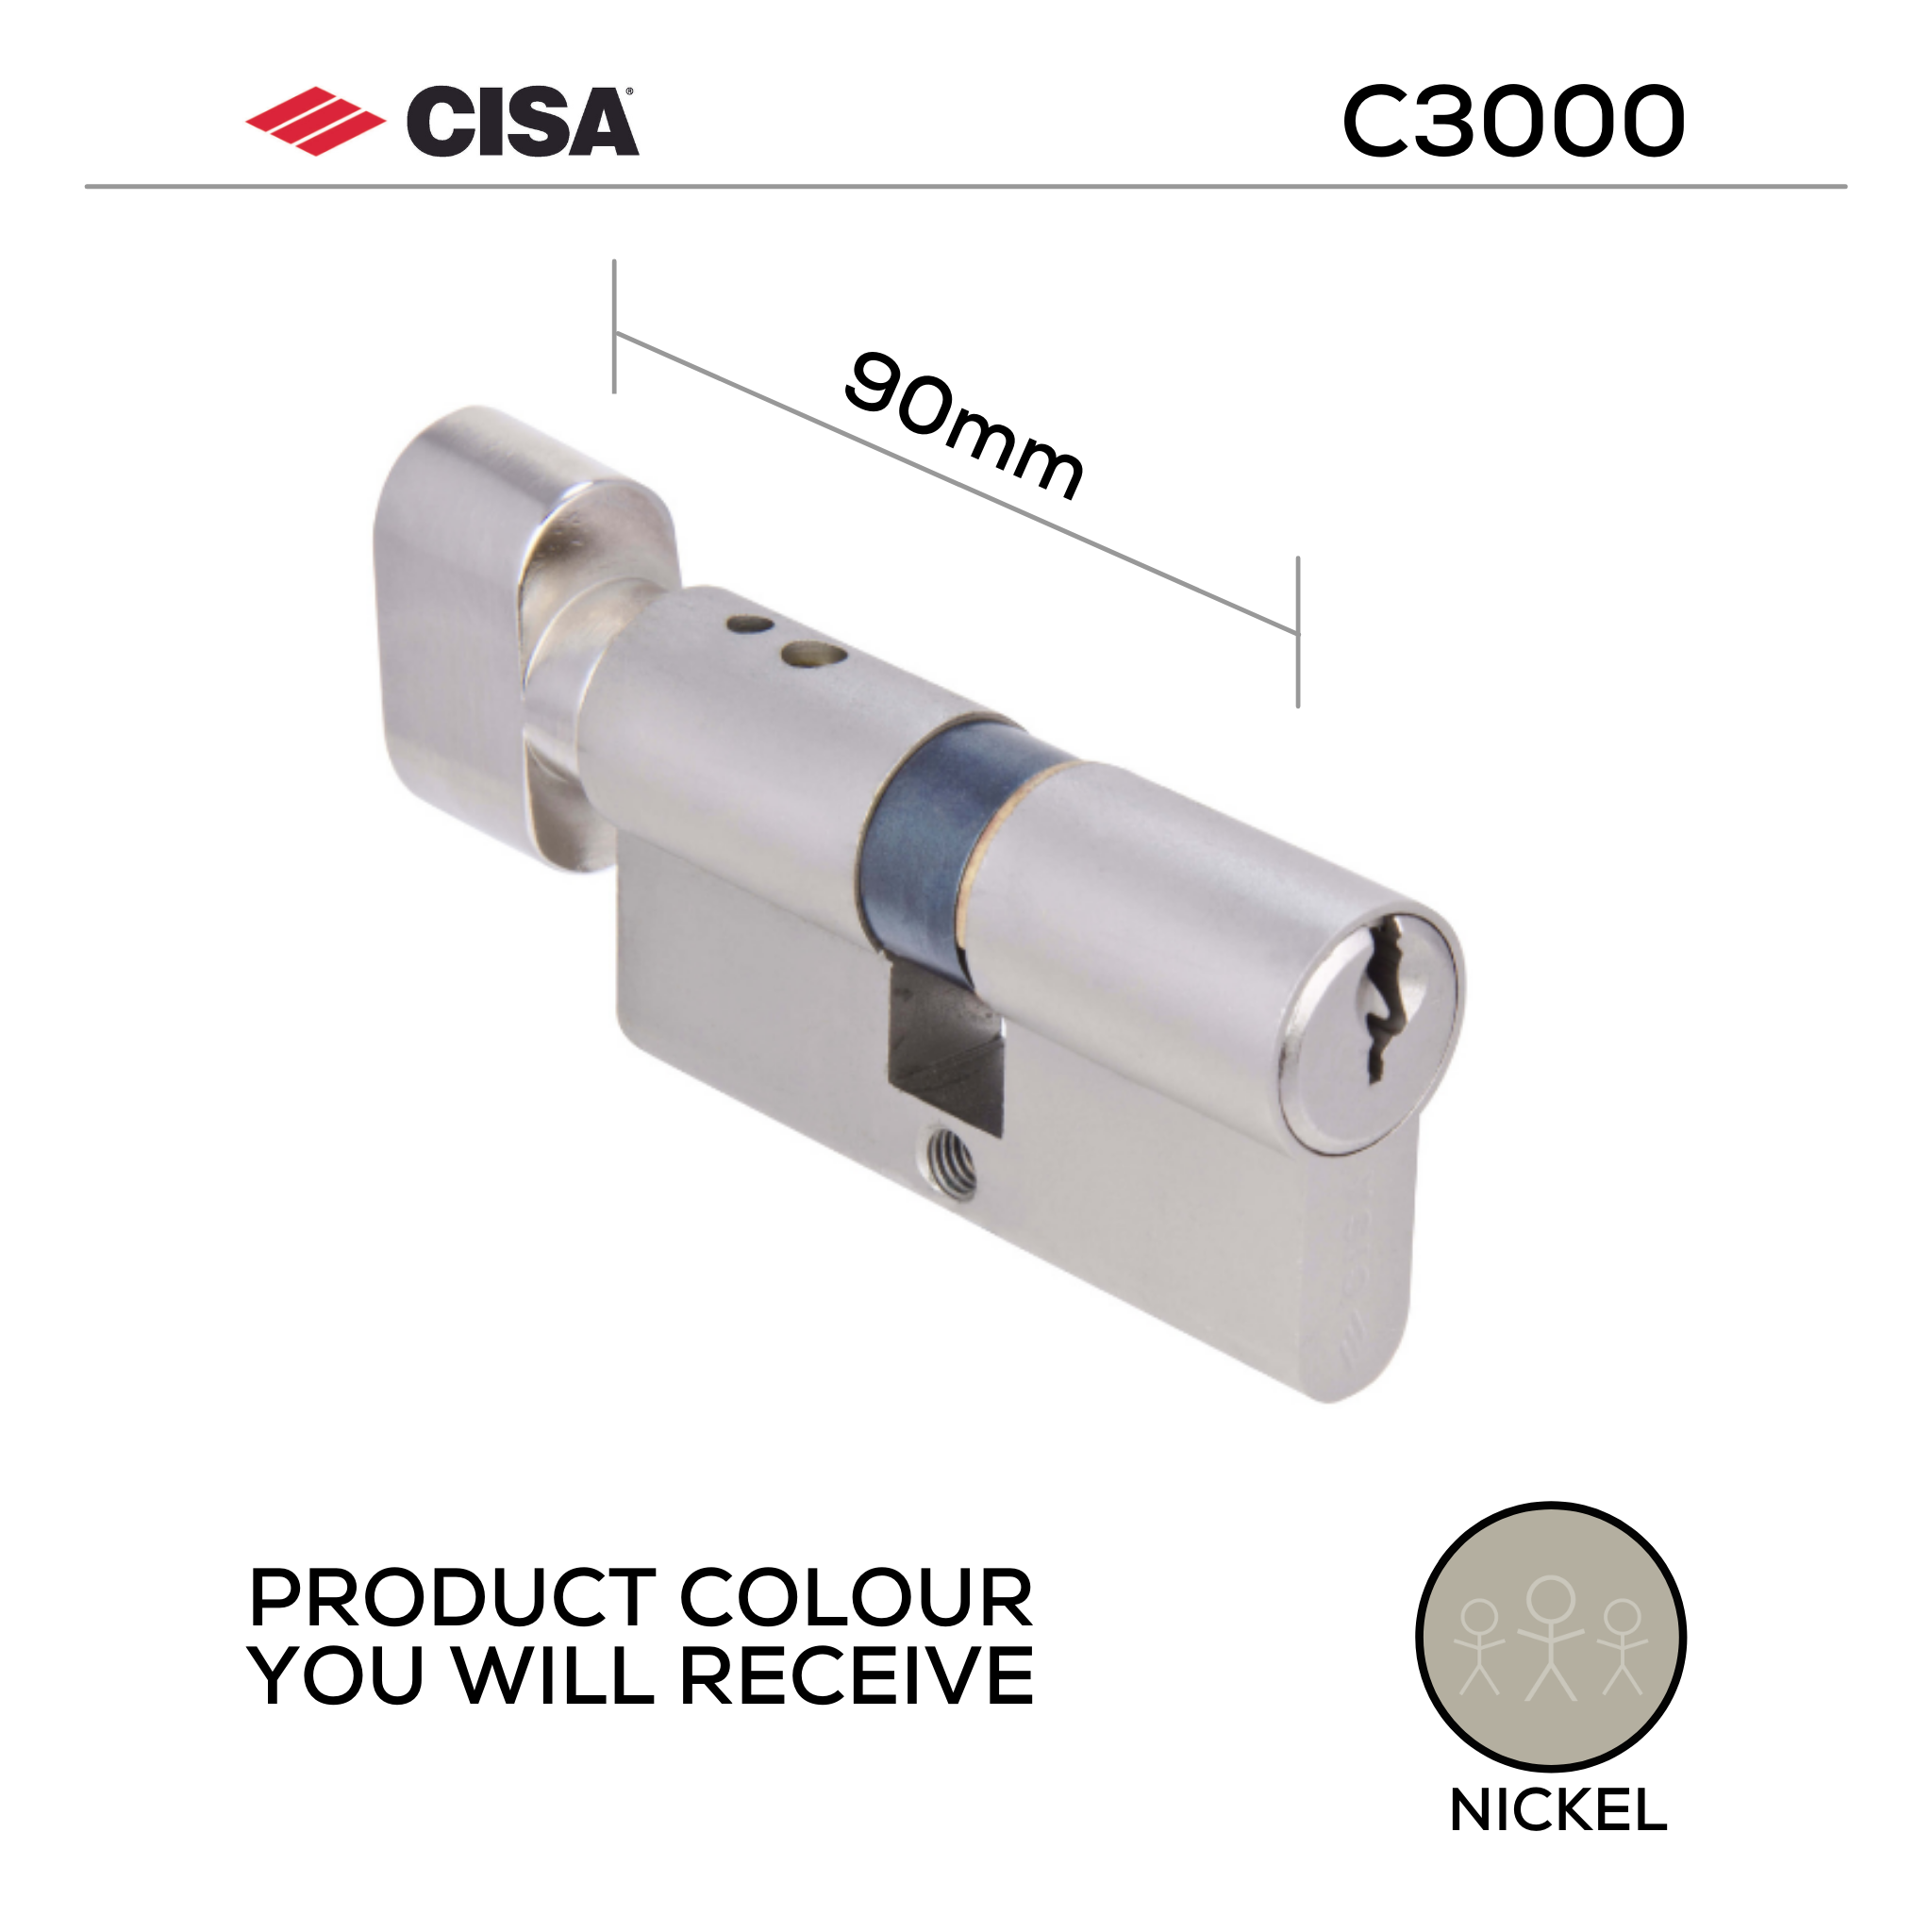 0N317-87-12-KD, 90mm - 59.5/29.5, Double Cylinder, C3000, Thumbturn to Key, Keyed to Differ (Standard), 3 Keys, 6 Pin, Nickel, CISA